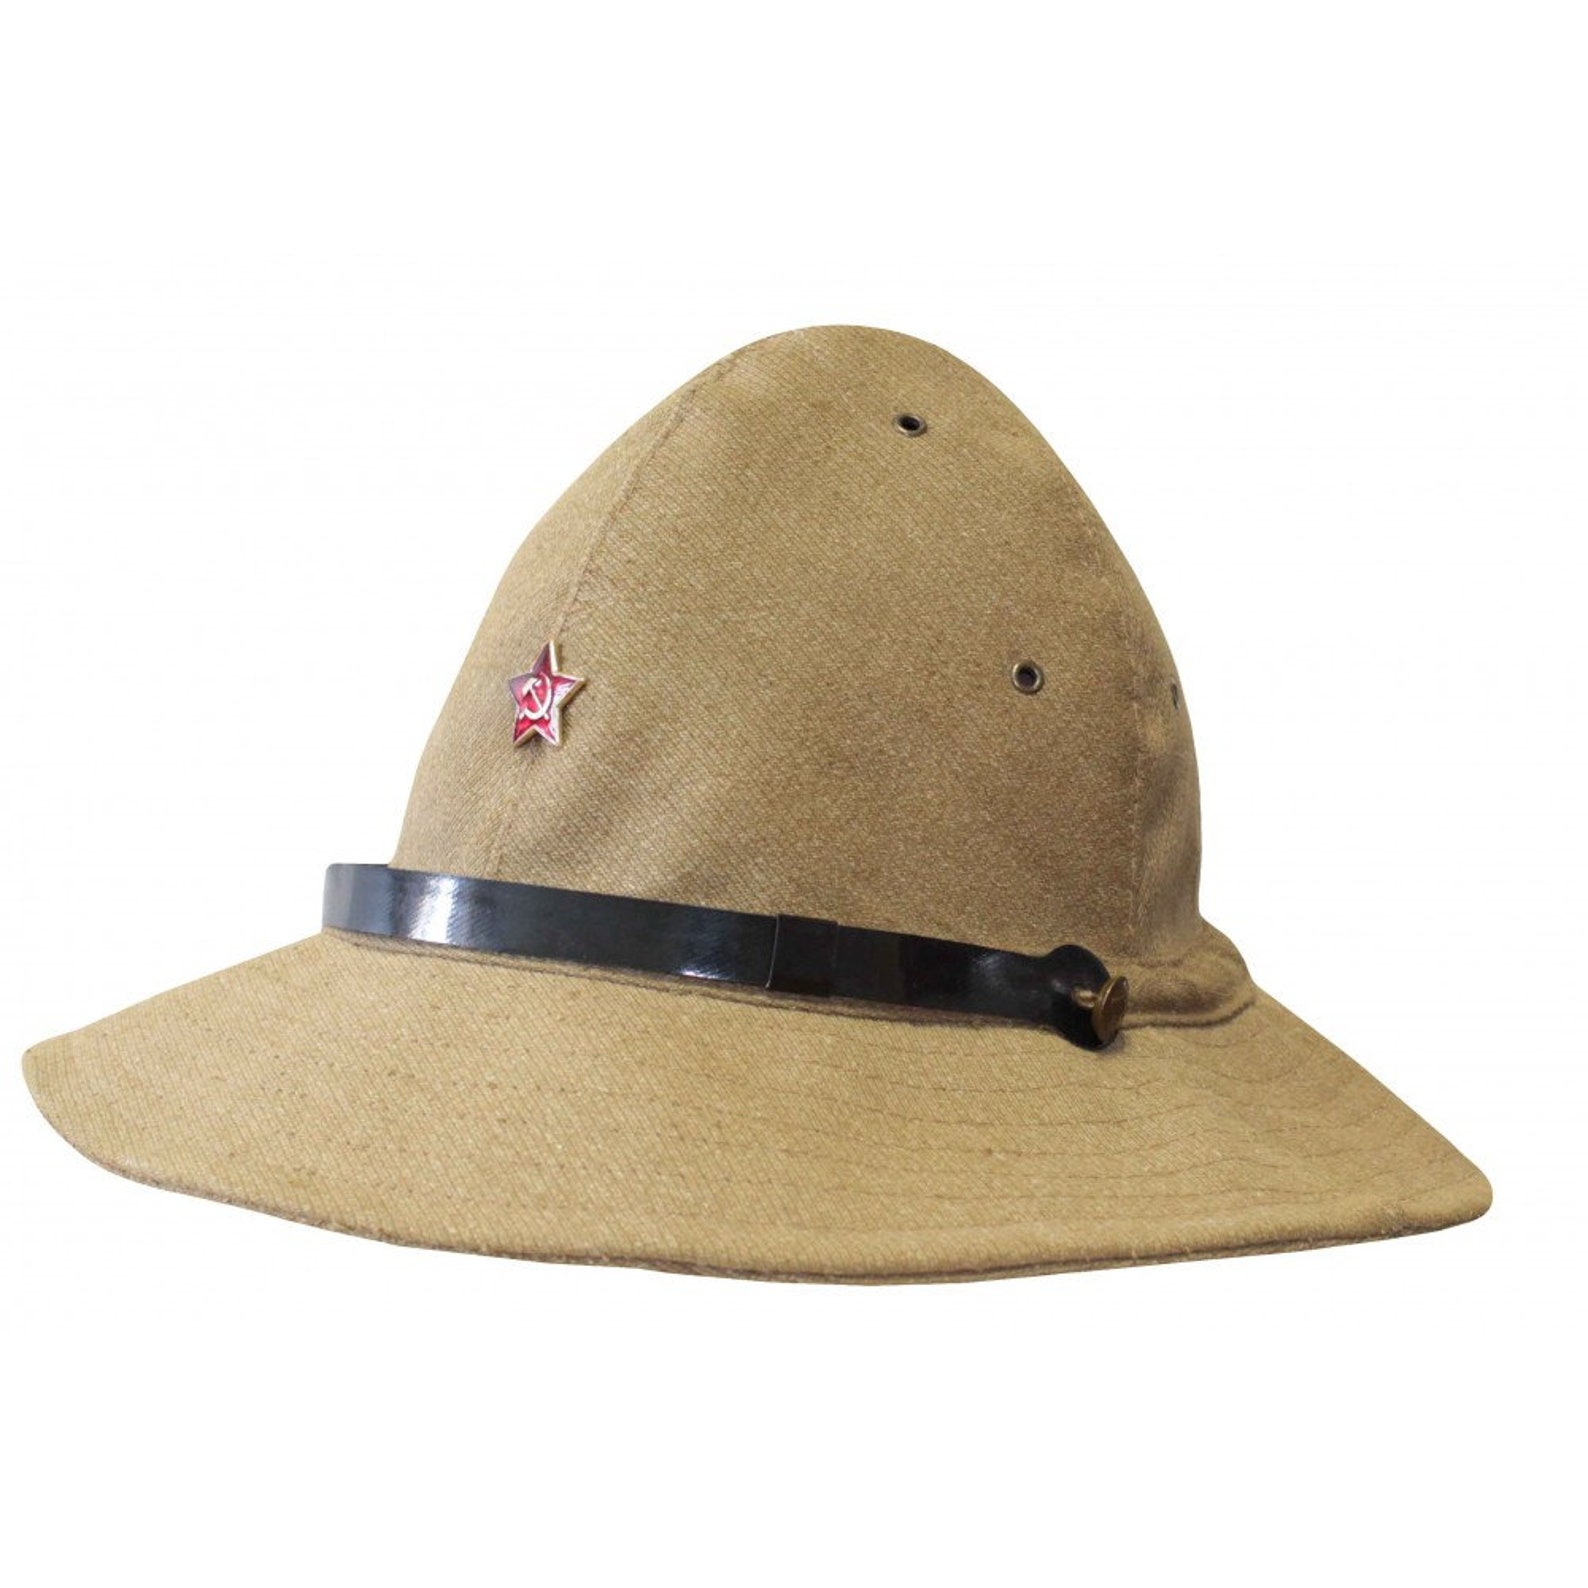 Каска в форме шляпы. Панама "афганка". Панама Халхинголка. Панама Boonie hat. Панама афганка на солдатах.